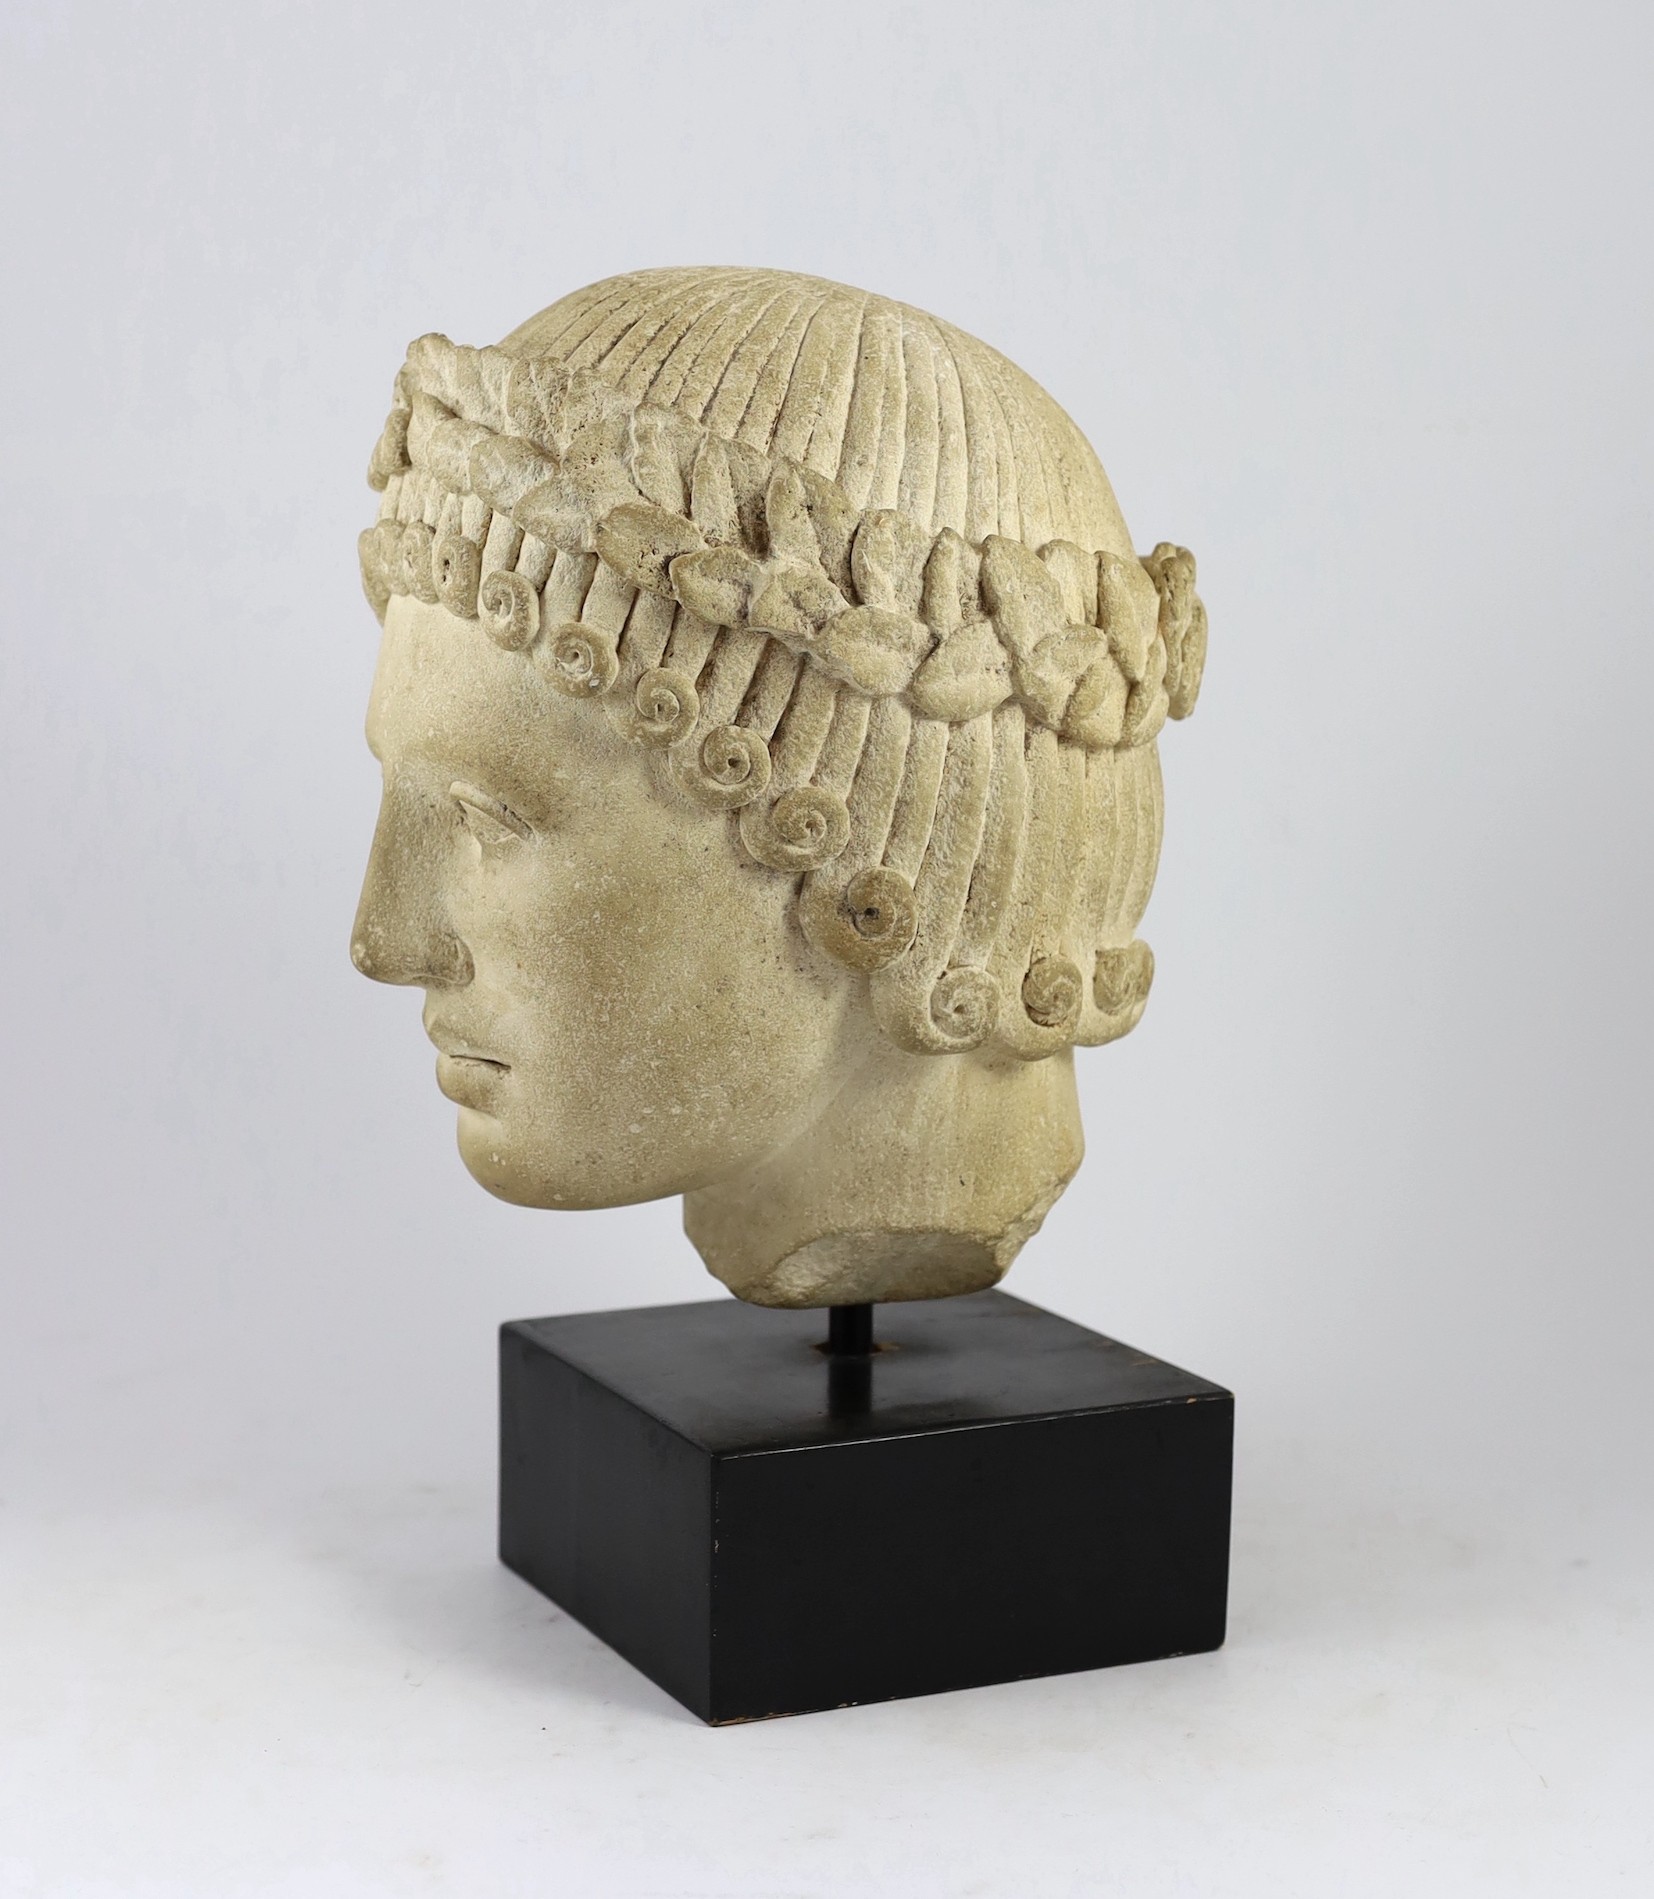 An antique limestone head wearing a laurel wreath diadem, possibly 18th/19th century, 29cm high overall 39cm